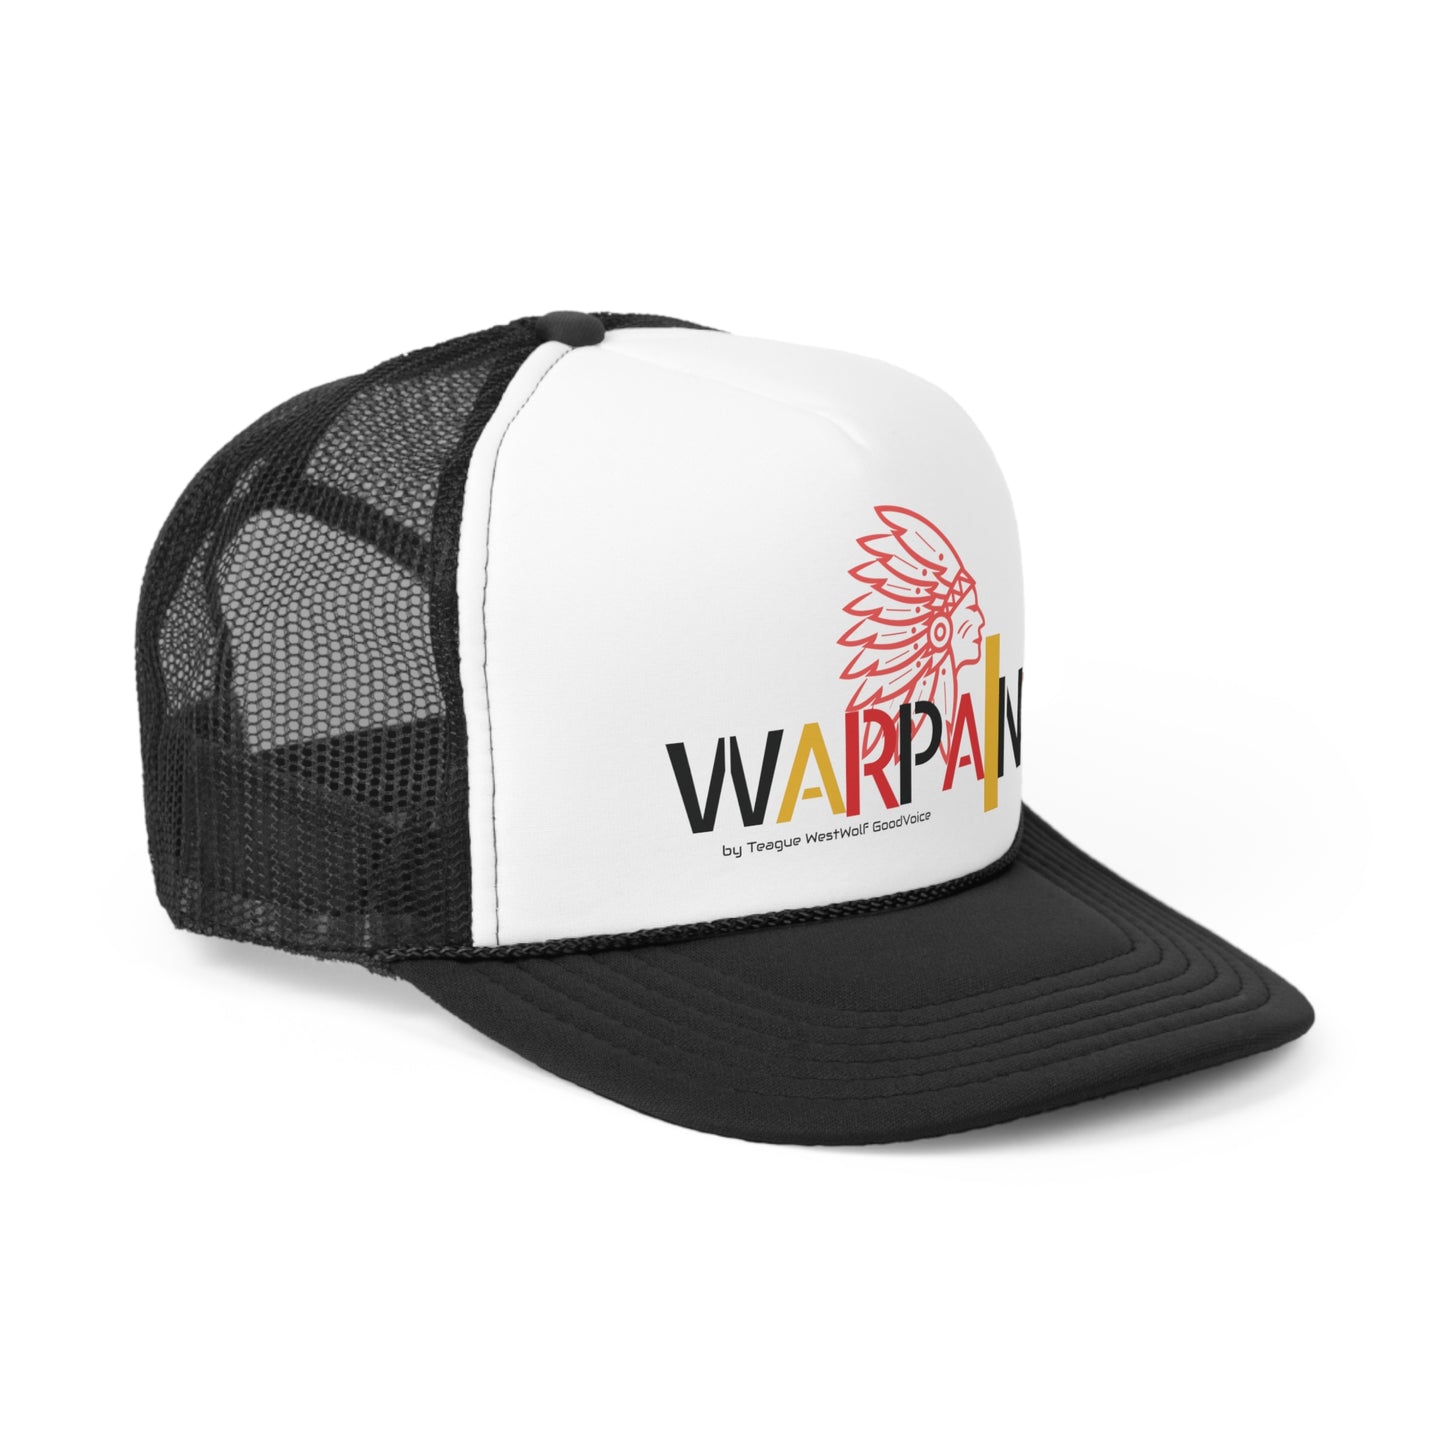 Wear Your WarPaint - Trucker Caps by Teague WestWolf GoodVoice